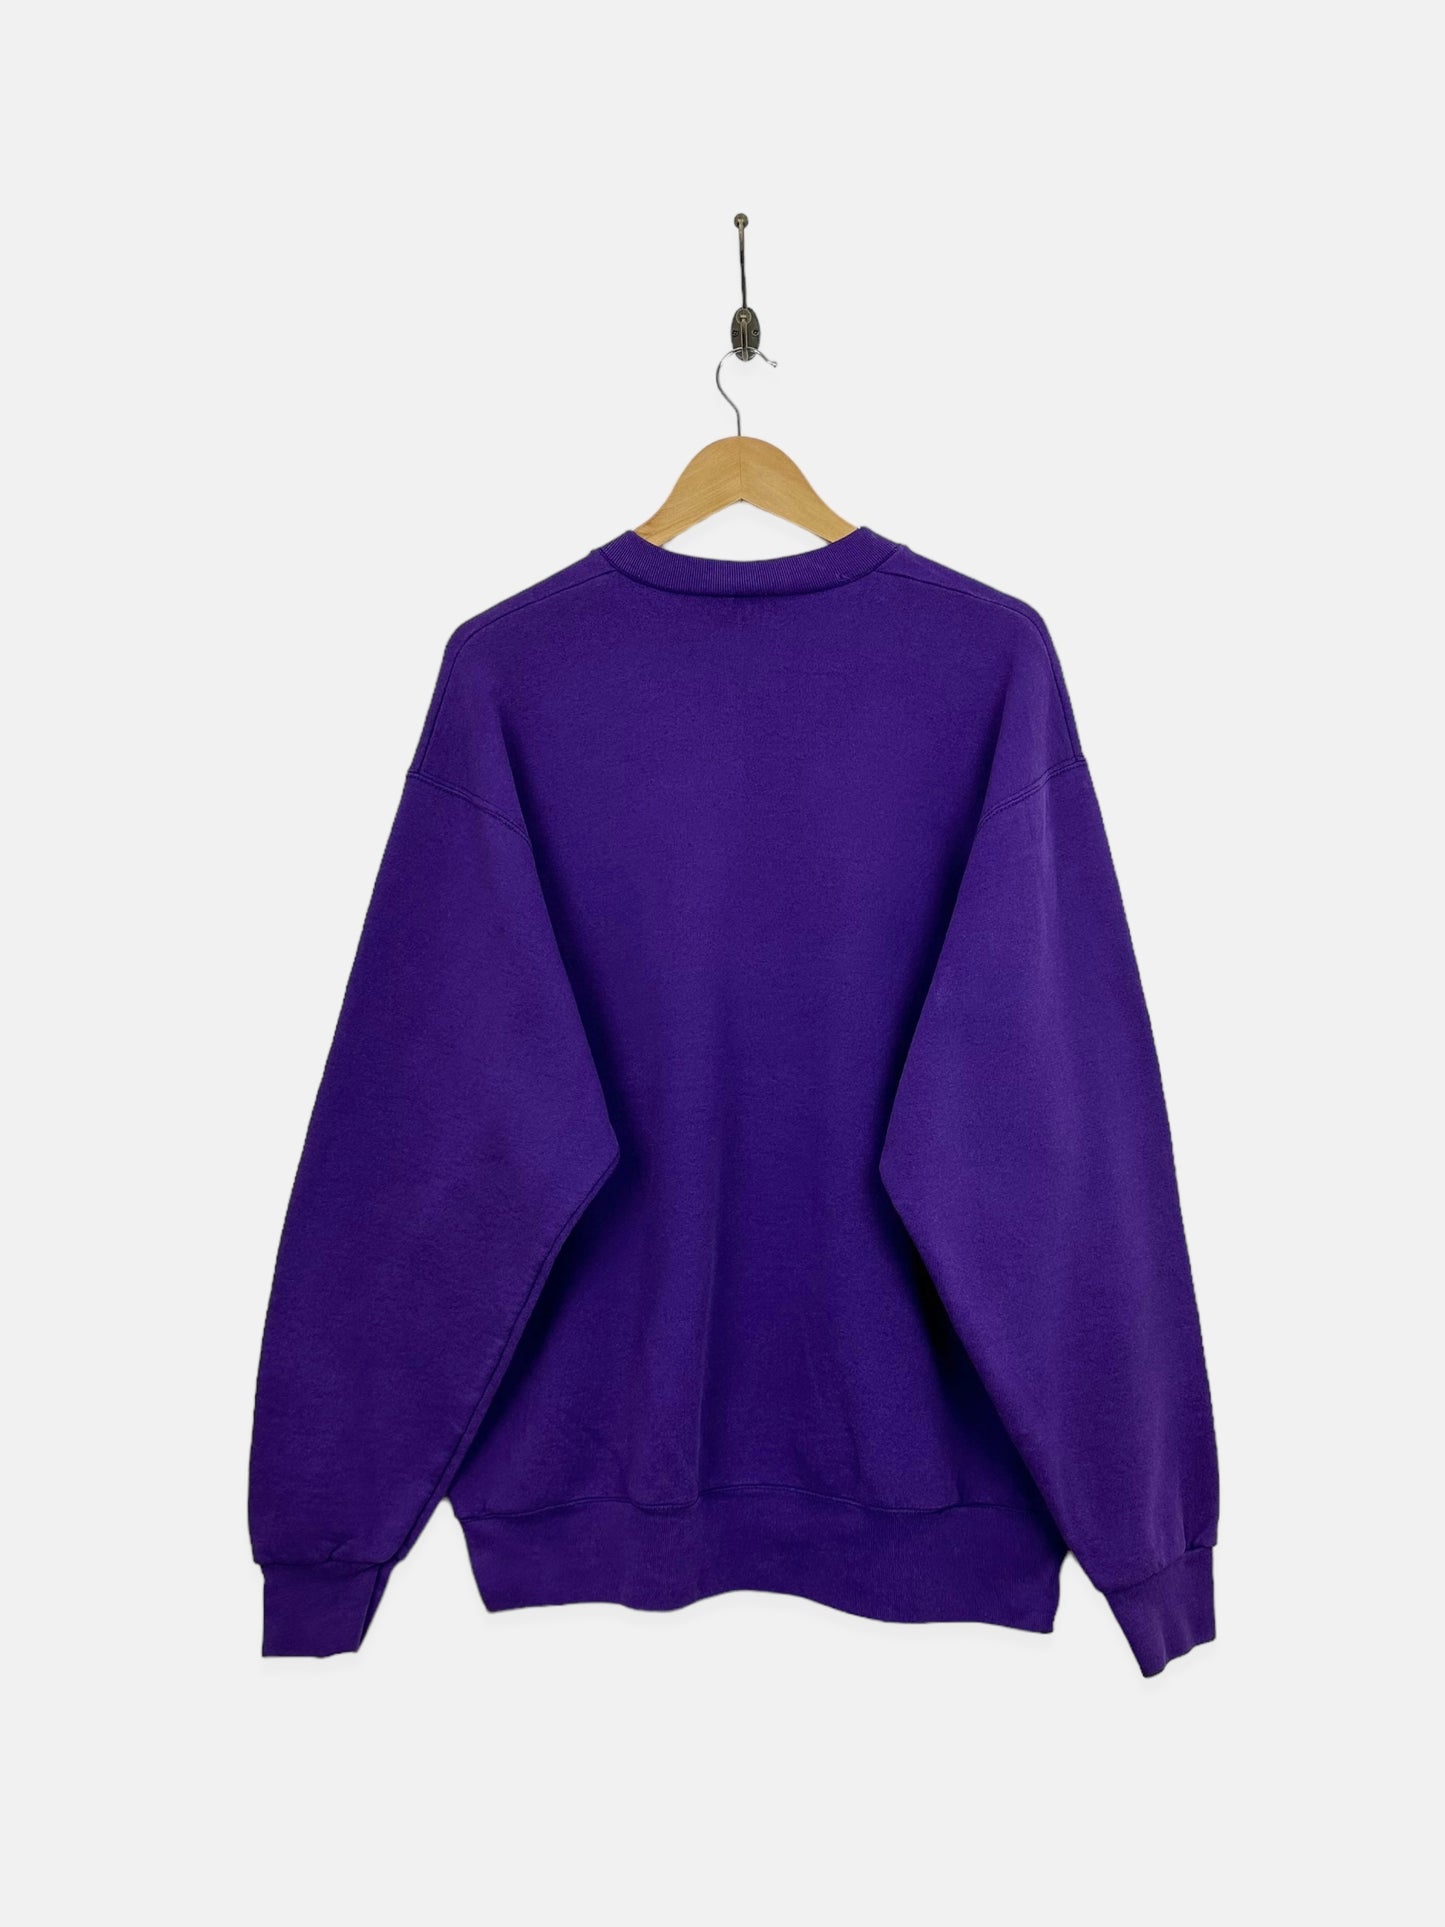 90's Baltimore Ravens NFL USA Made Embroidered Vintage Sweatshirt Size M-L